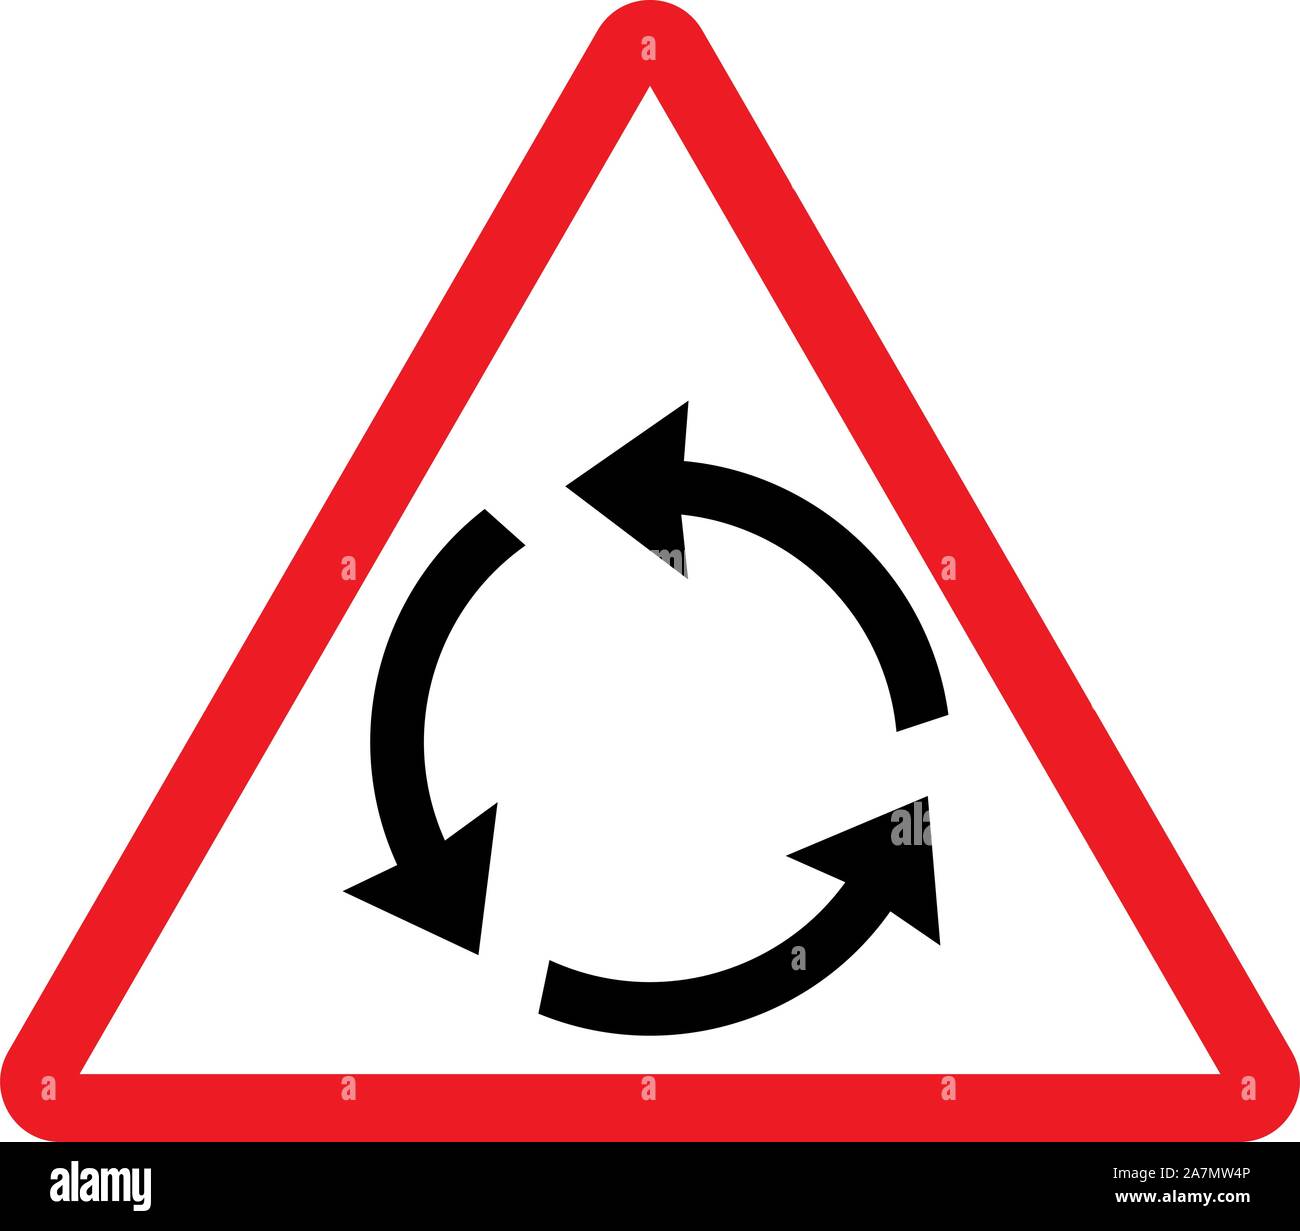 Verkehr Verkehrsschild Kreisverkehr Vector Illustration. Dreieckige fahren Symbole rot weiß. Stock Vektor